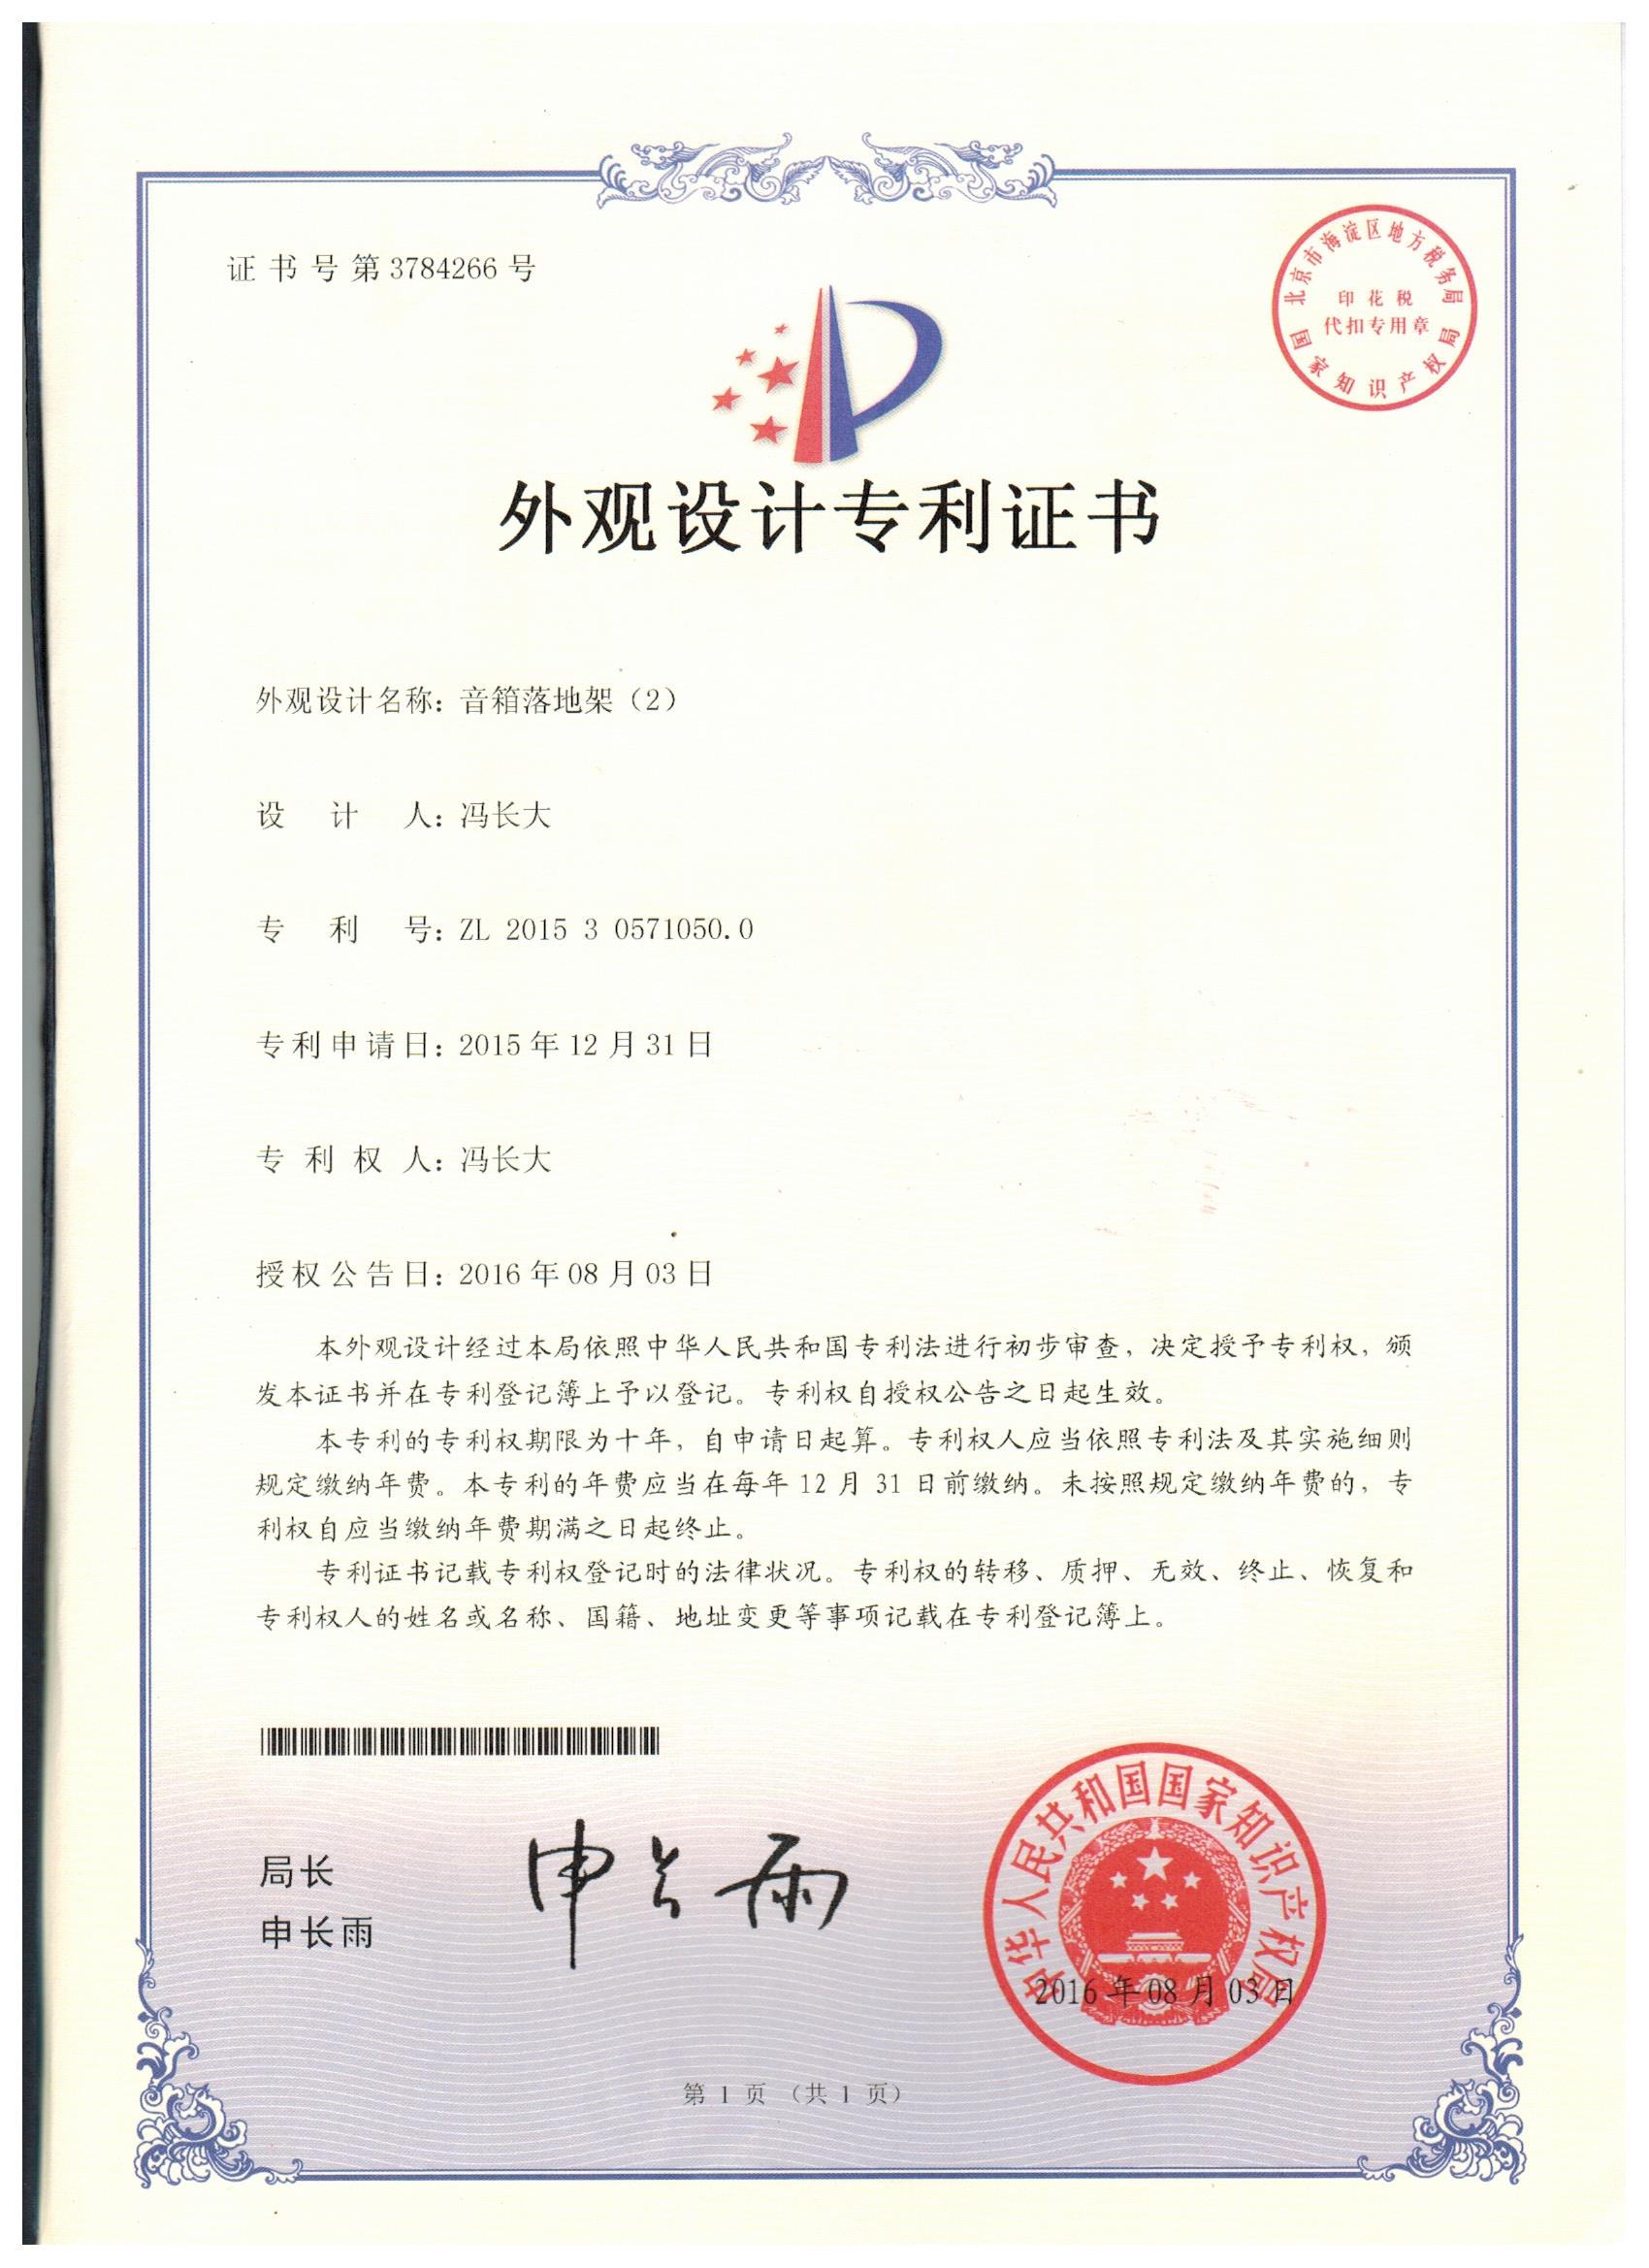 Design Patent Certificate: Speaker Floor Stand (2)